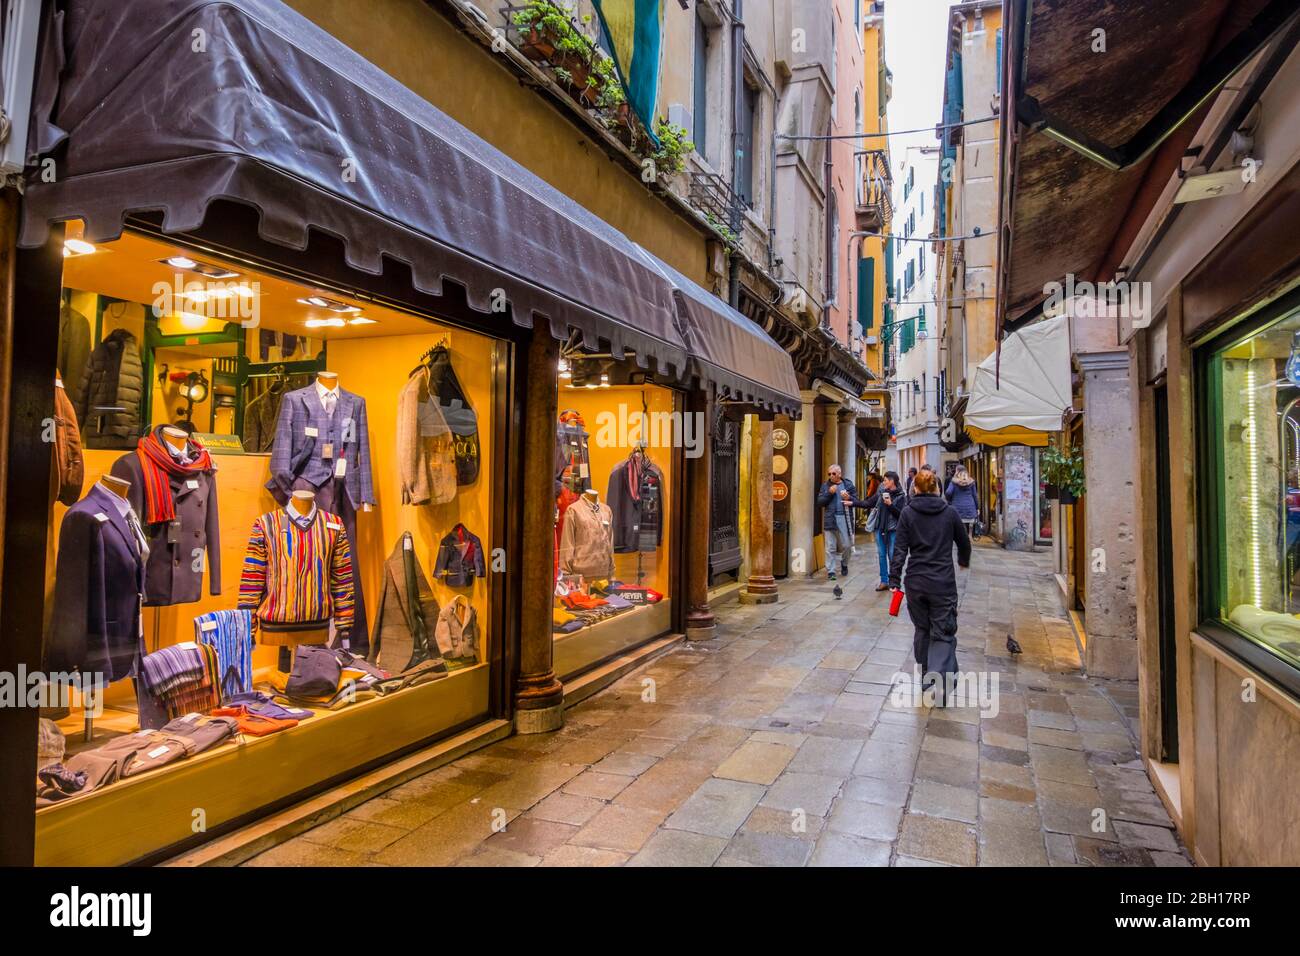 Rugeta del Ravano shoppng street, San Polo district, Venice, Italy Stock Photo